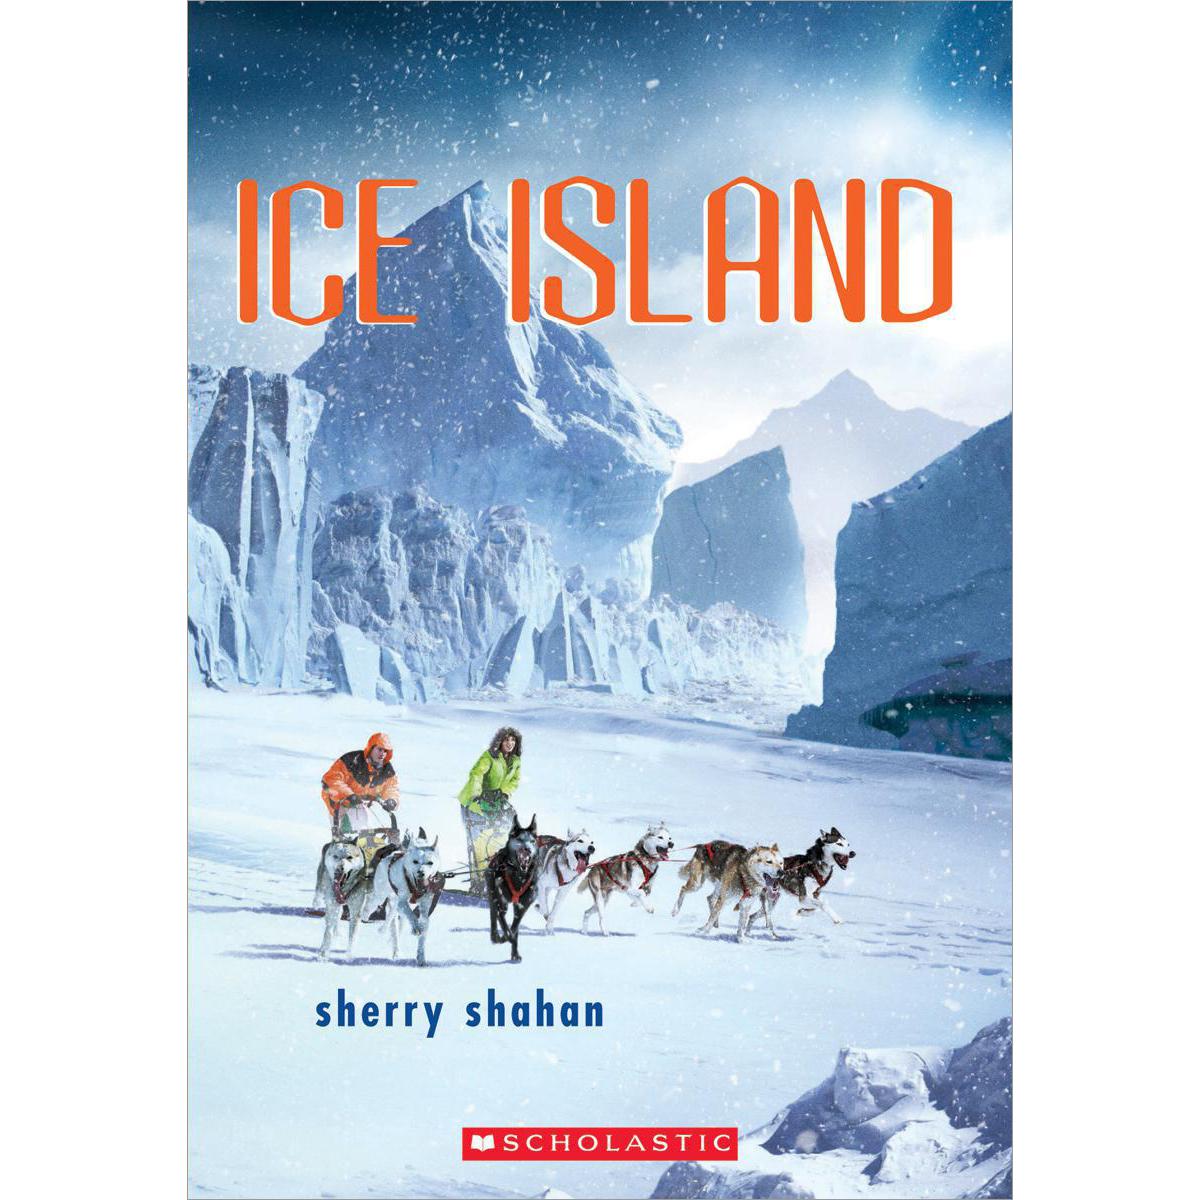  Ice Island 10-Pack 